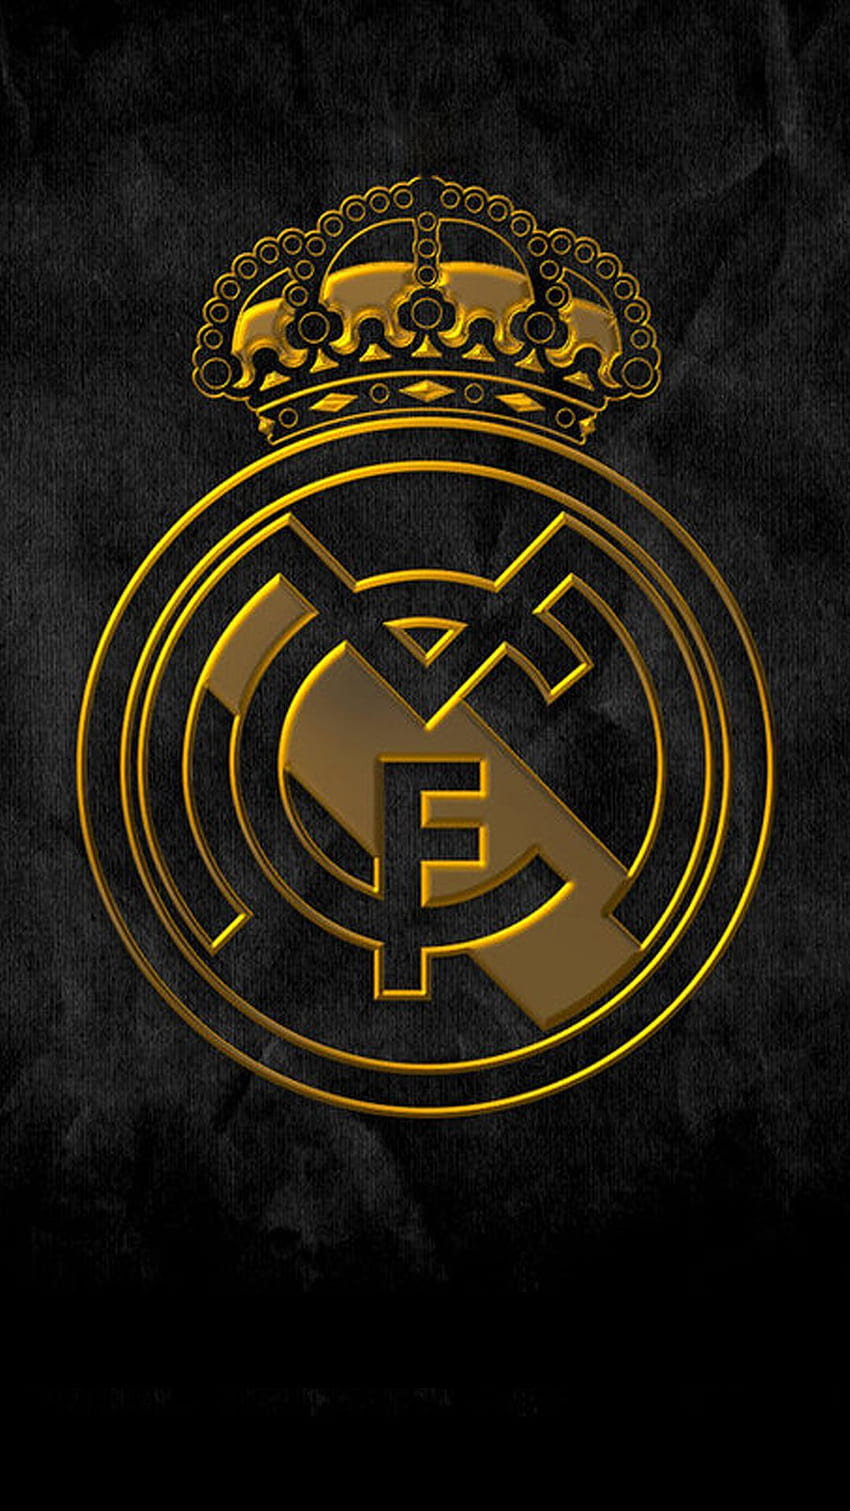 HALA MADRID KAMI NYATA, HALA MADRID KAMI NYATA, HALA MADRID KAMI NYATA. Madrid , Real madrid , logo Real madrid wallpaper ponsel HD